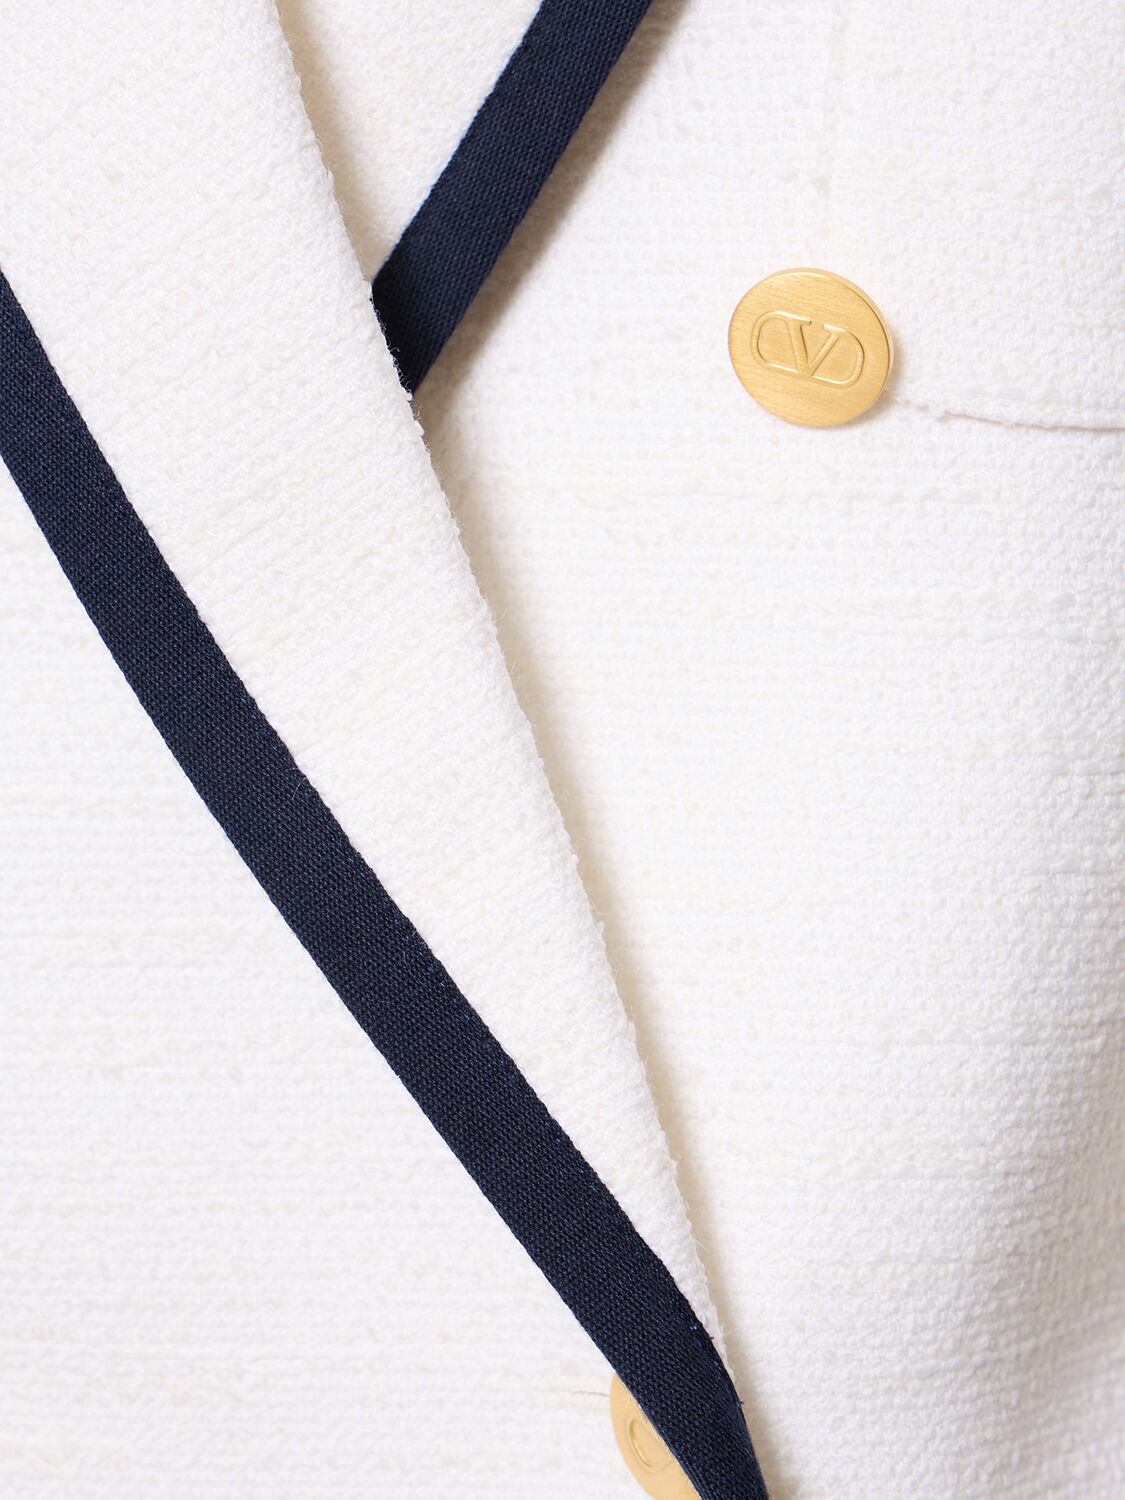 Shop Valentino Double Breast Crisp Tweed Jacket In White,navy